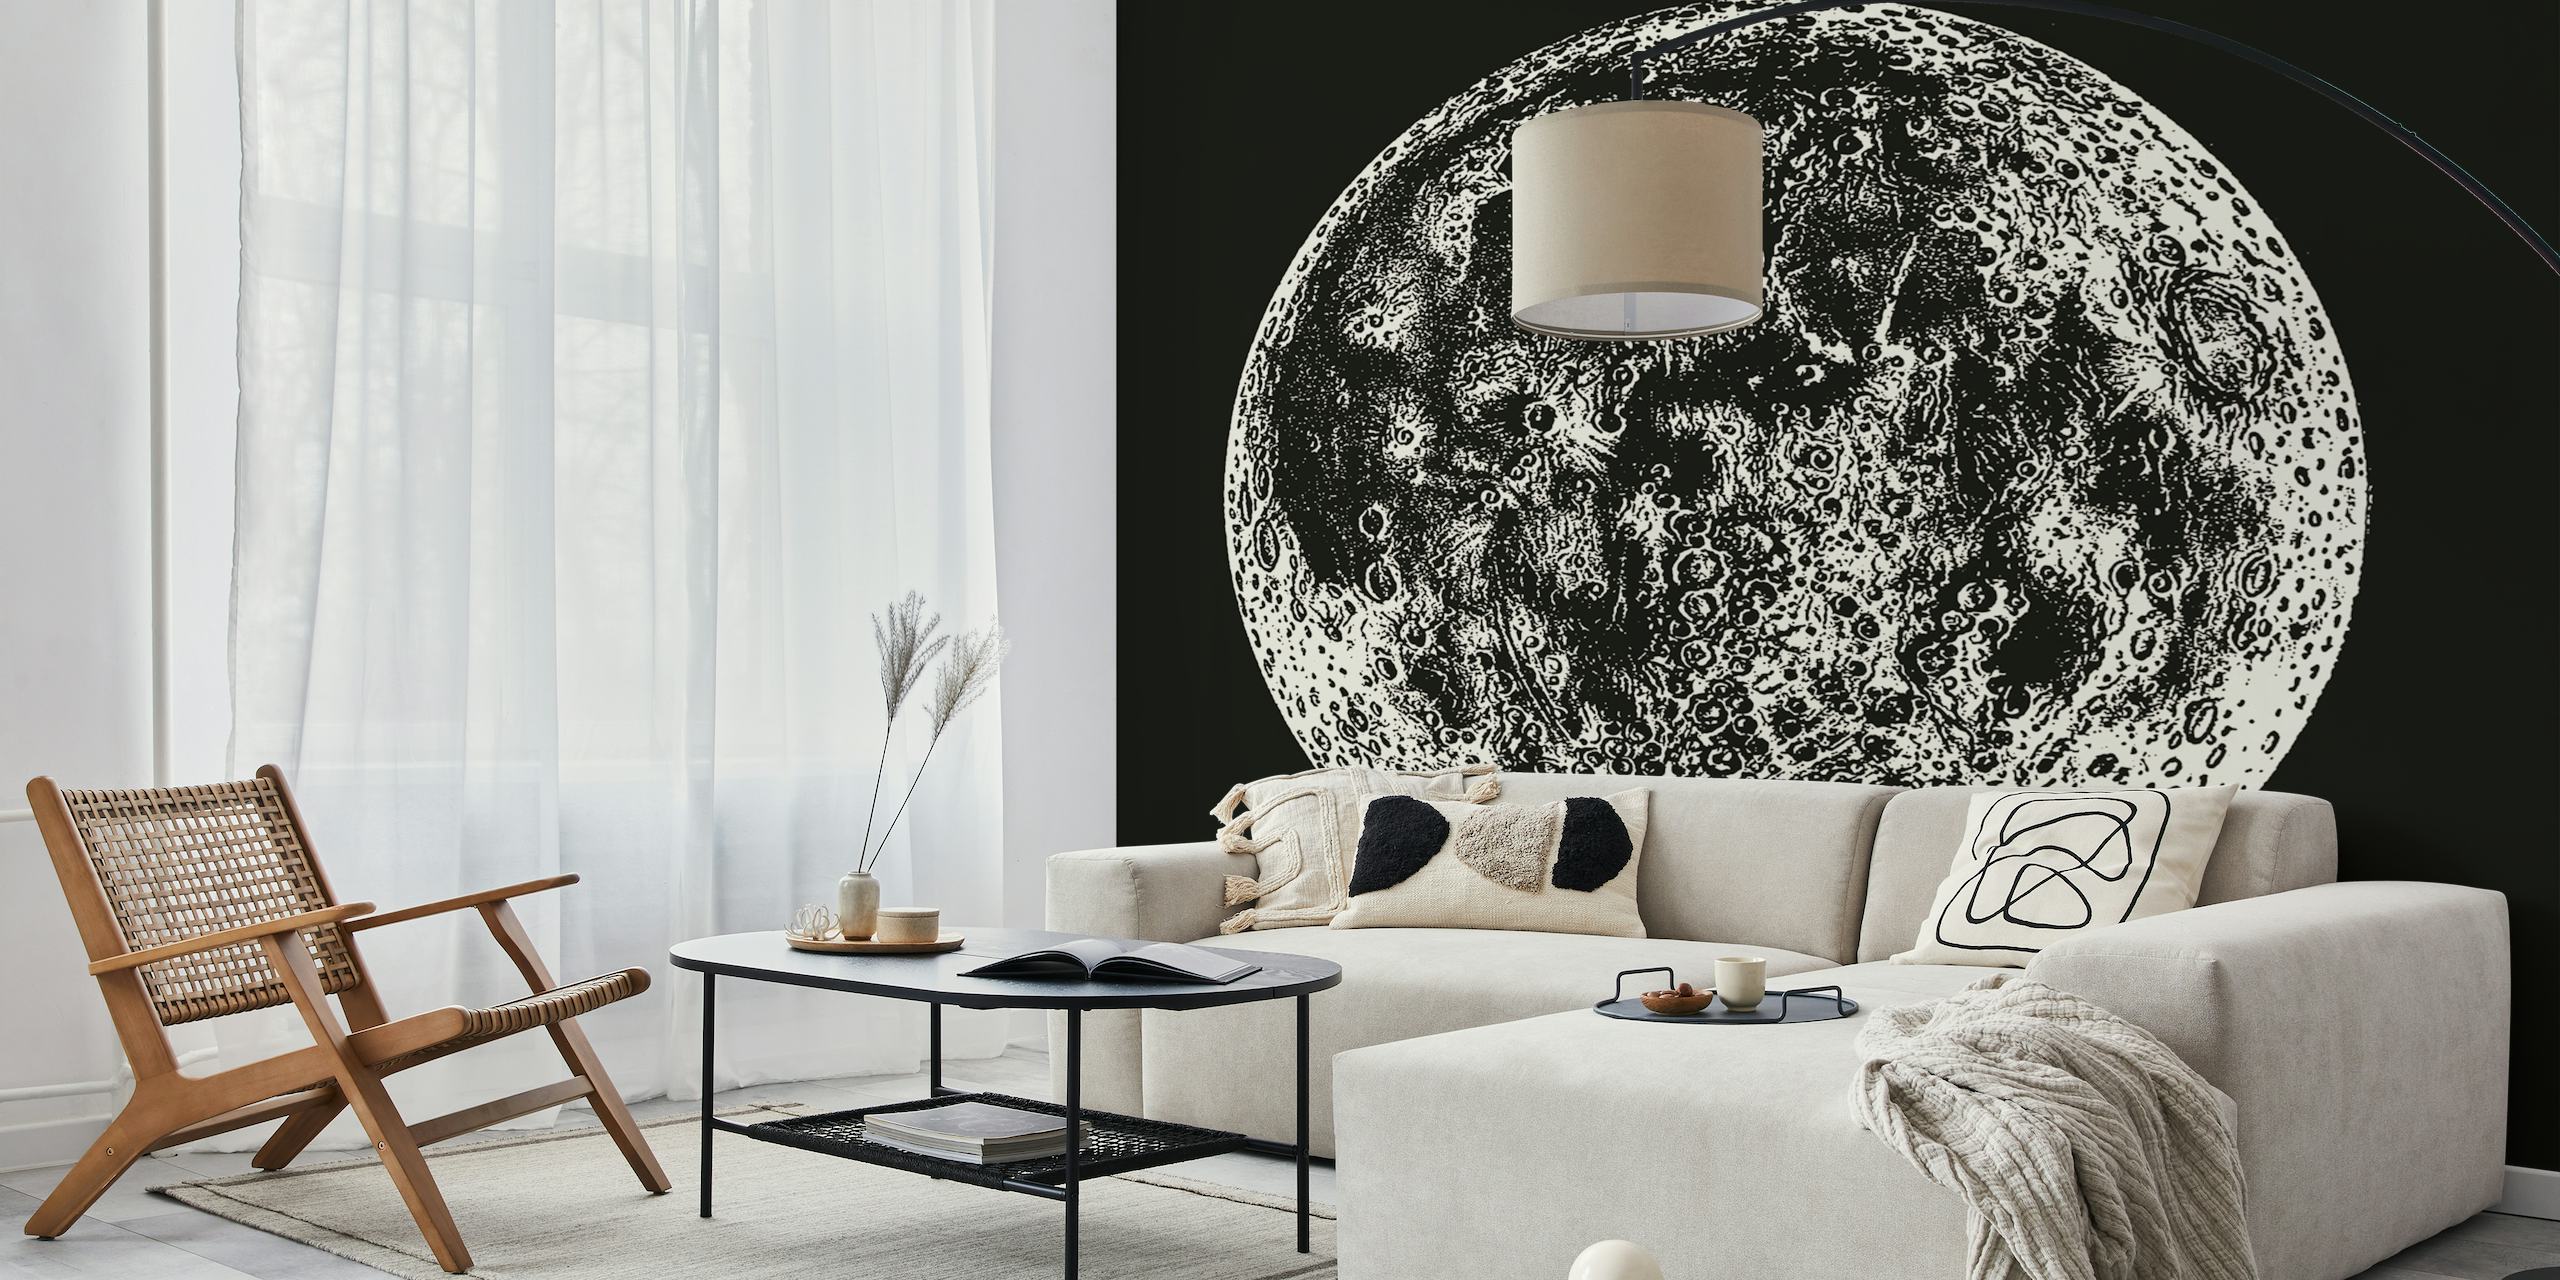 Full Moon - Vintage Astër wallpaper